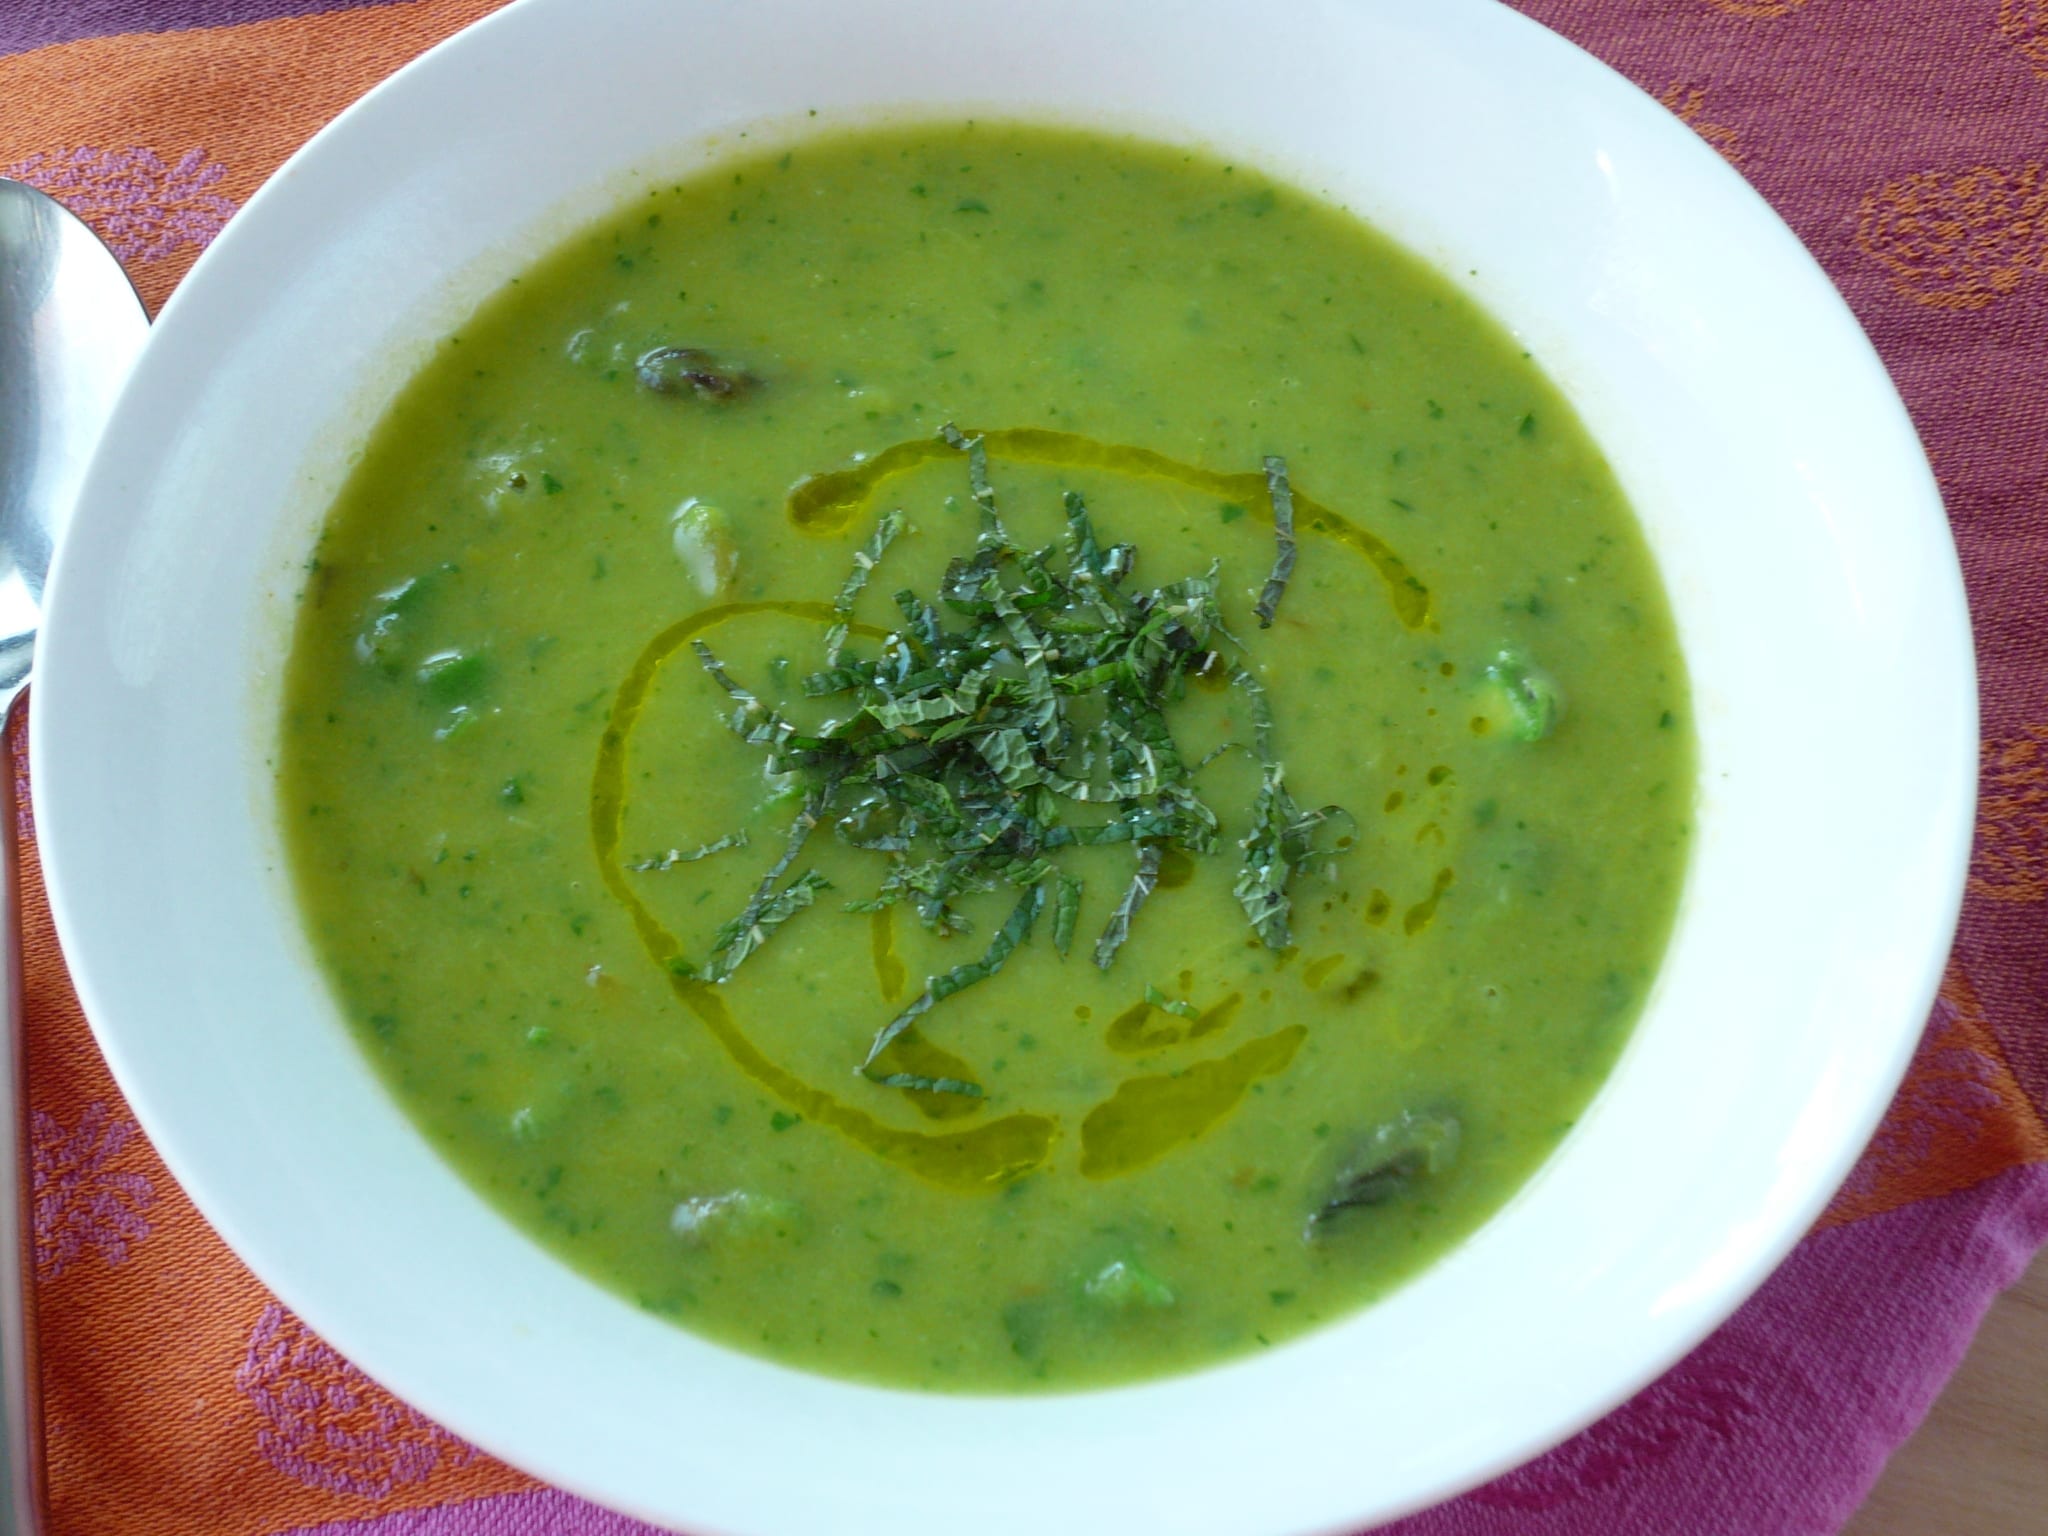 A bowl of delicious asparagus soup